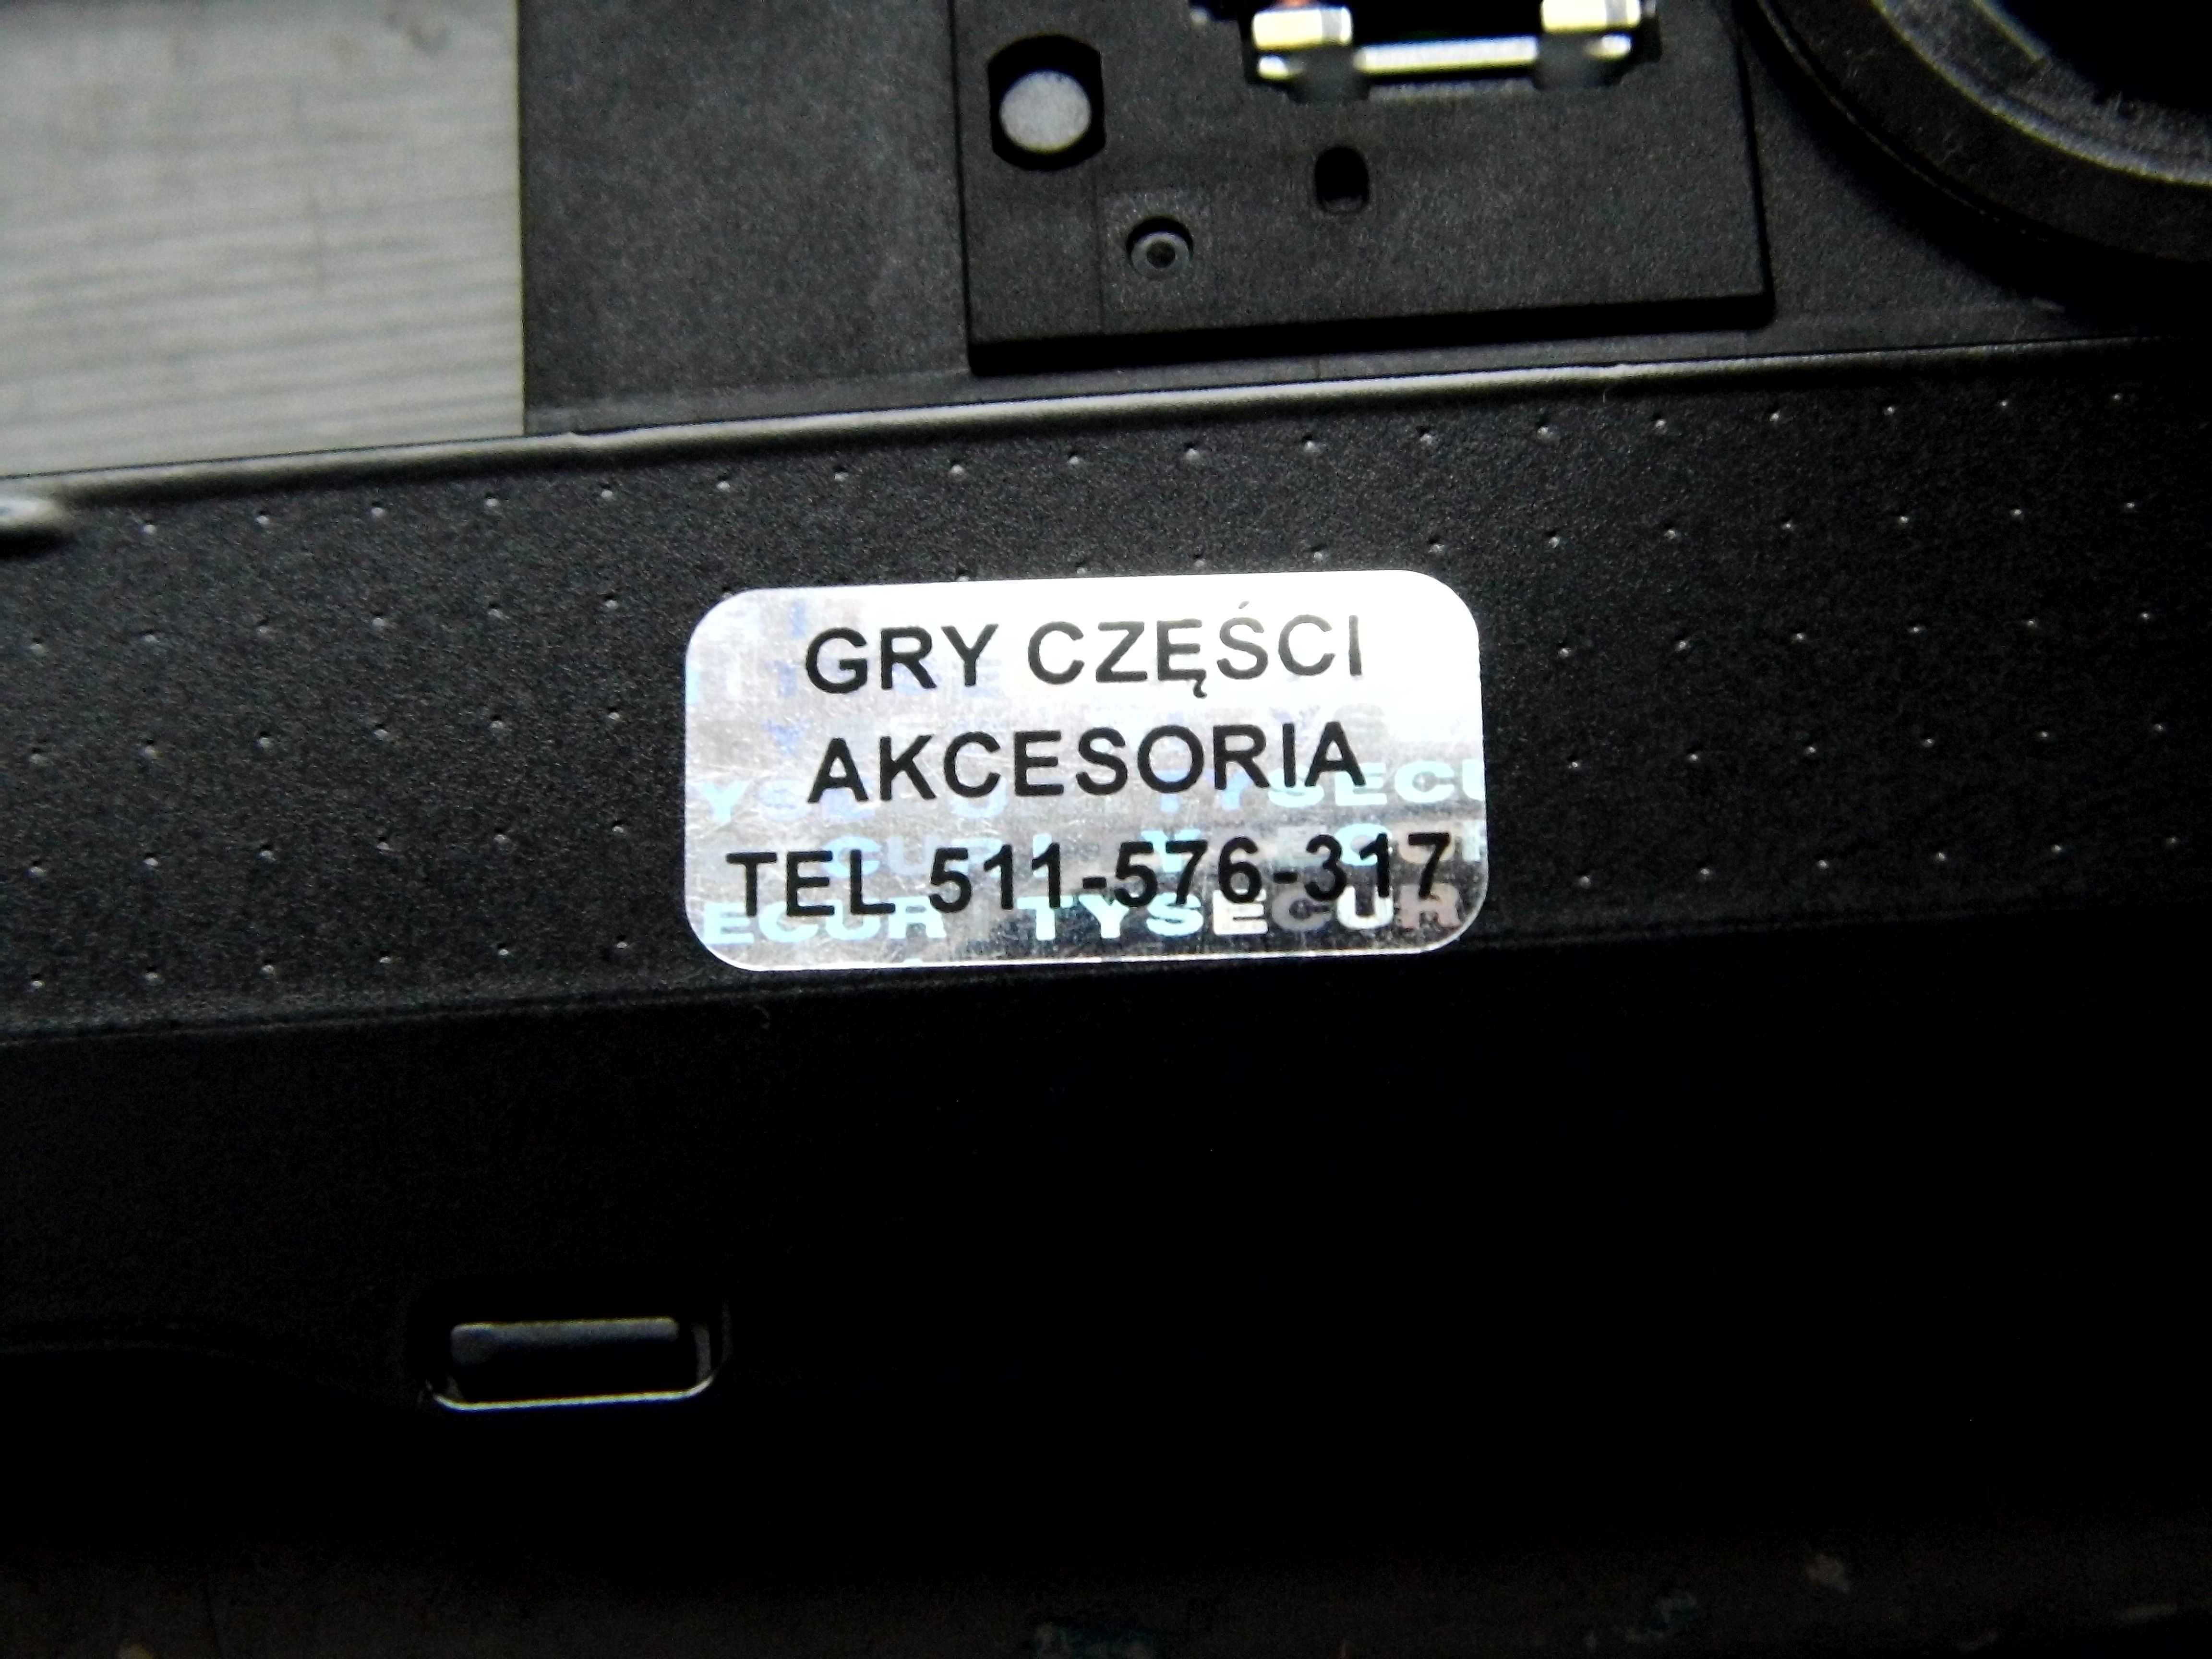 Oryginalny napęd Lite-On DG-6M2S do konsoli XBox One